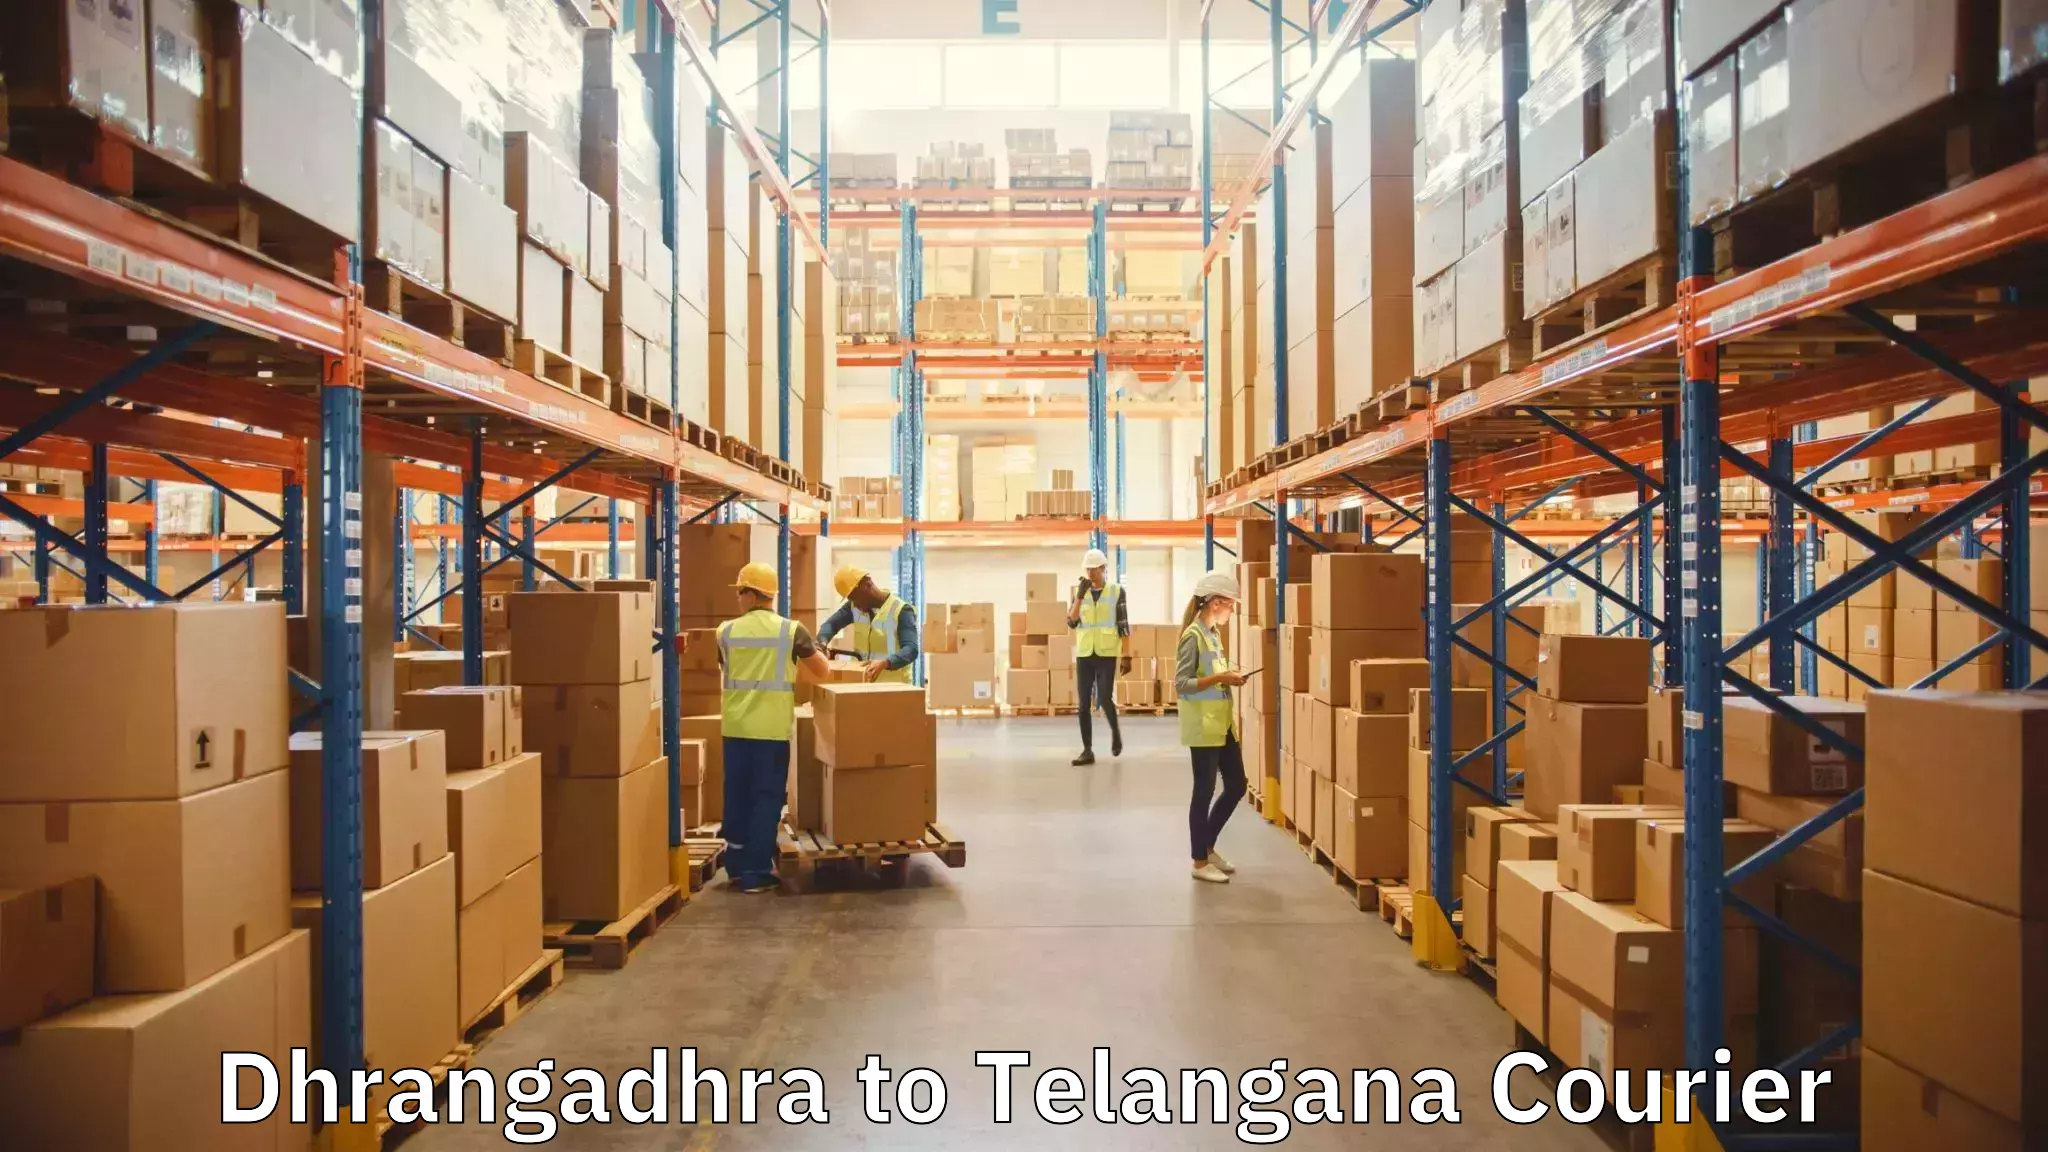 Professional moving company in Dhrangadhra to Gangadhara